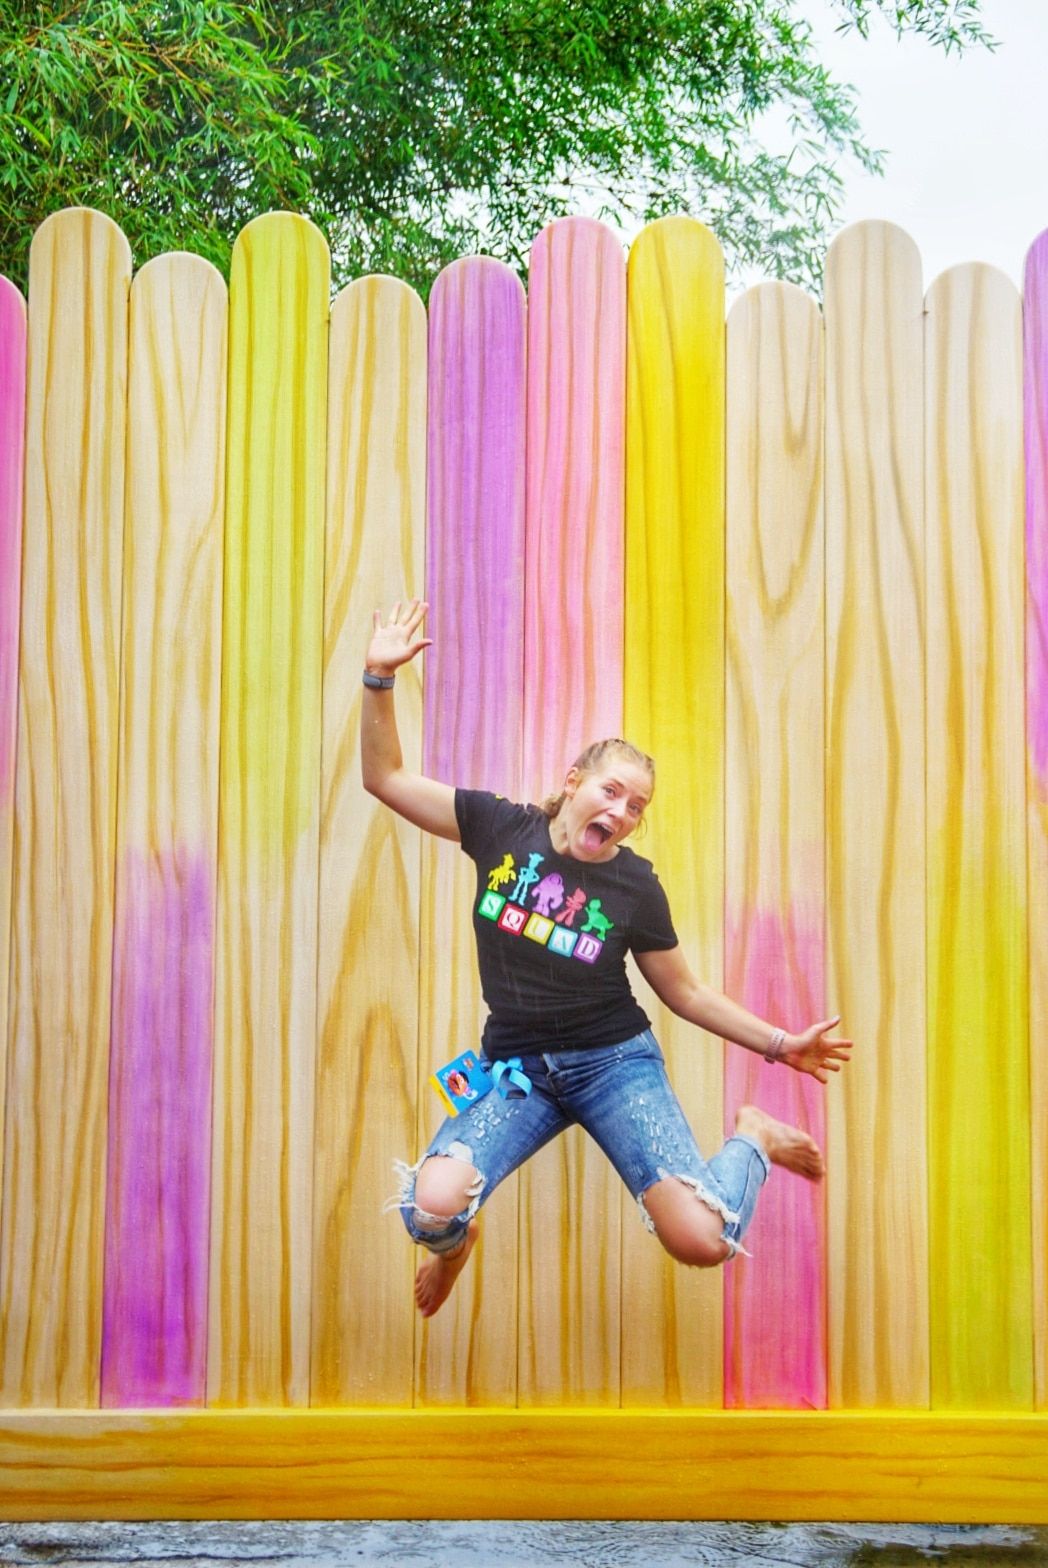 „Popsicle stick“ siena „Toy Story Land Orlando“